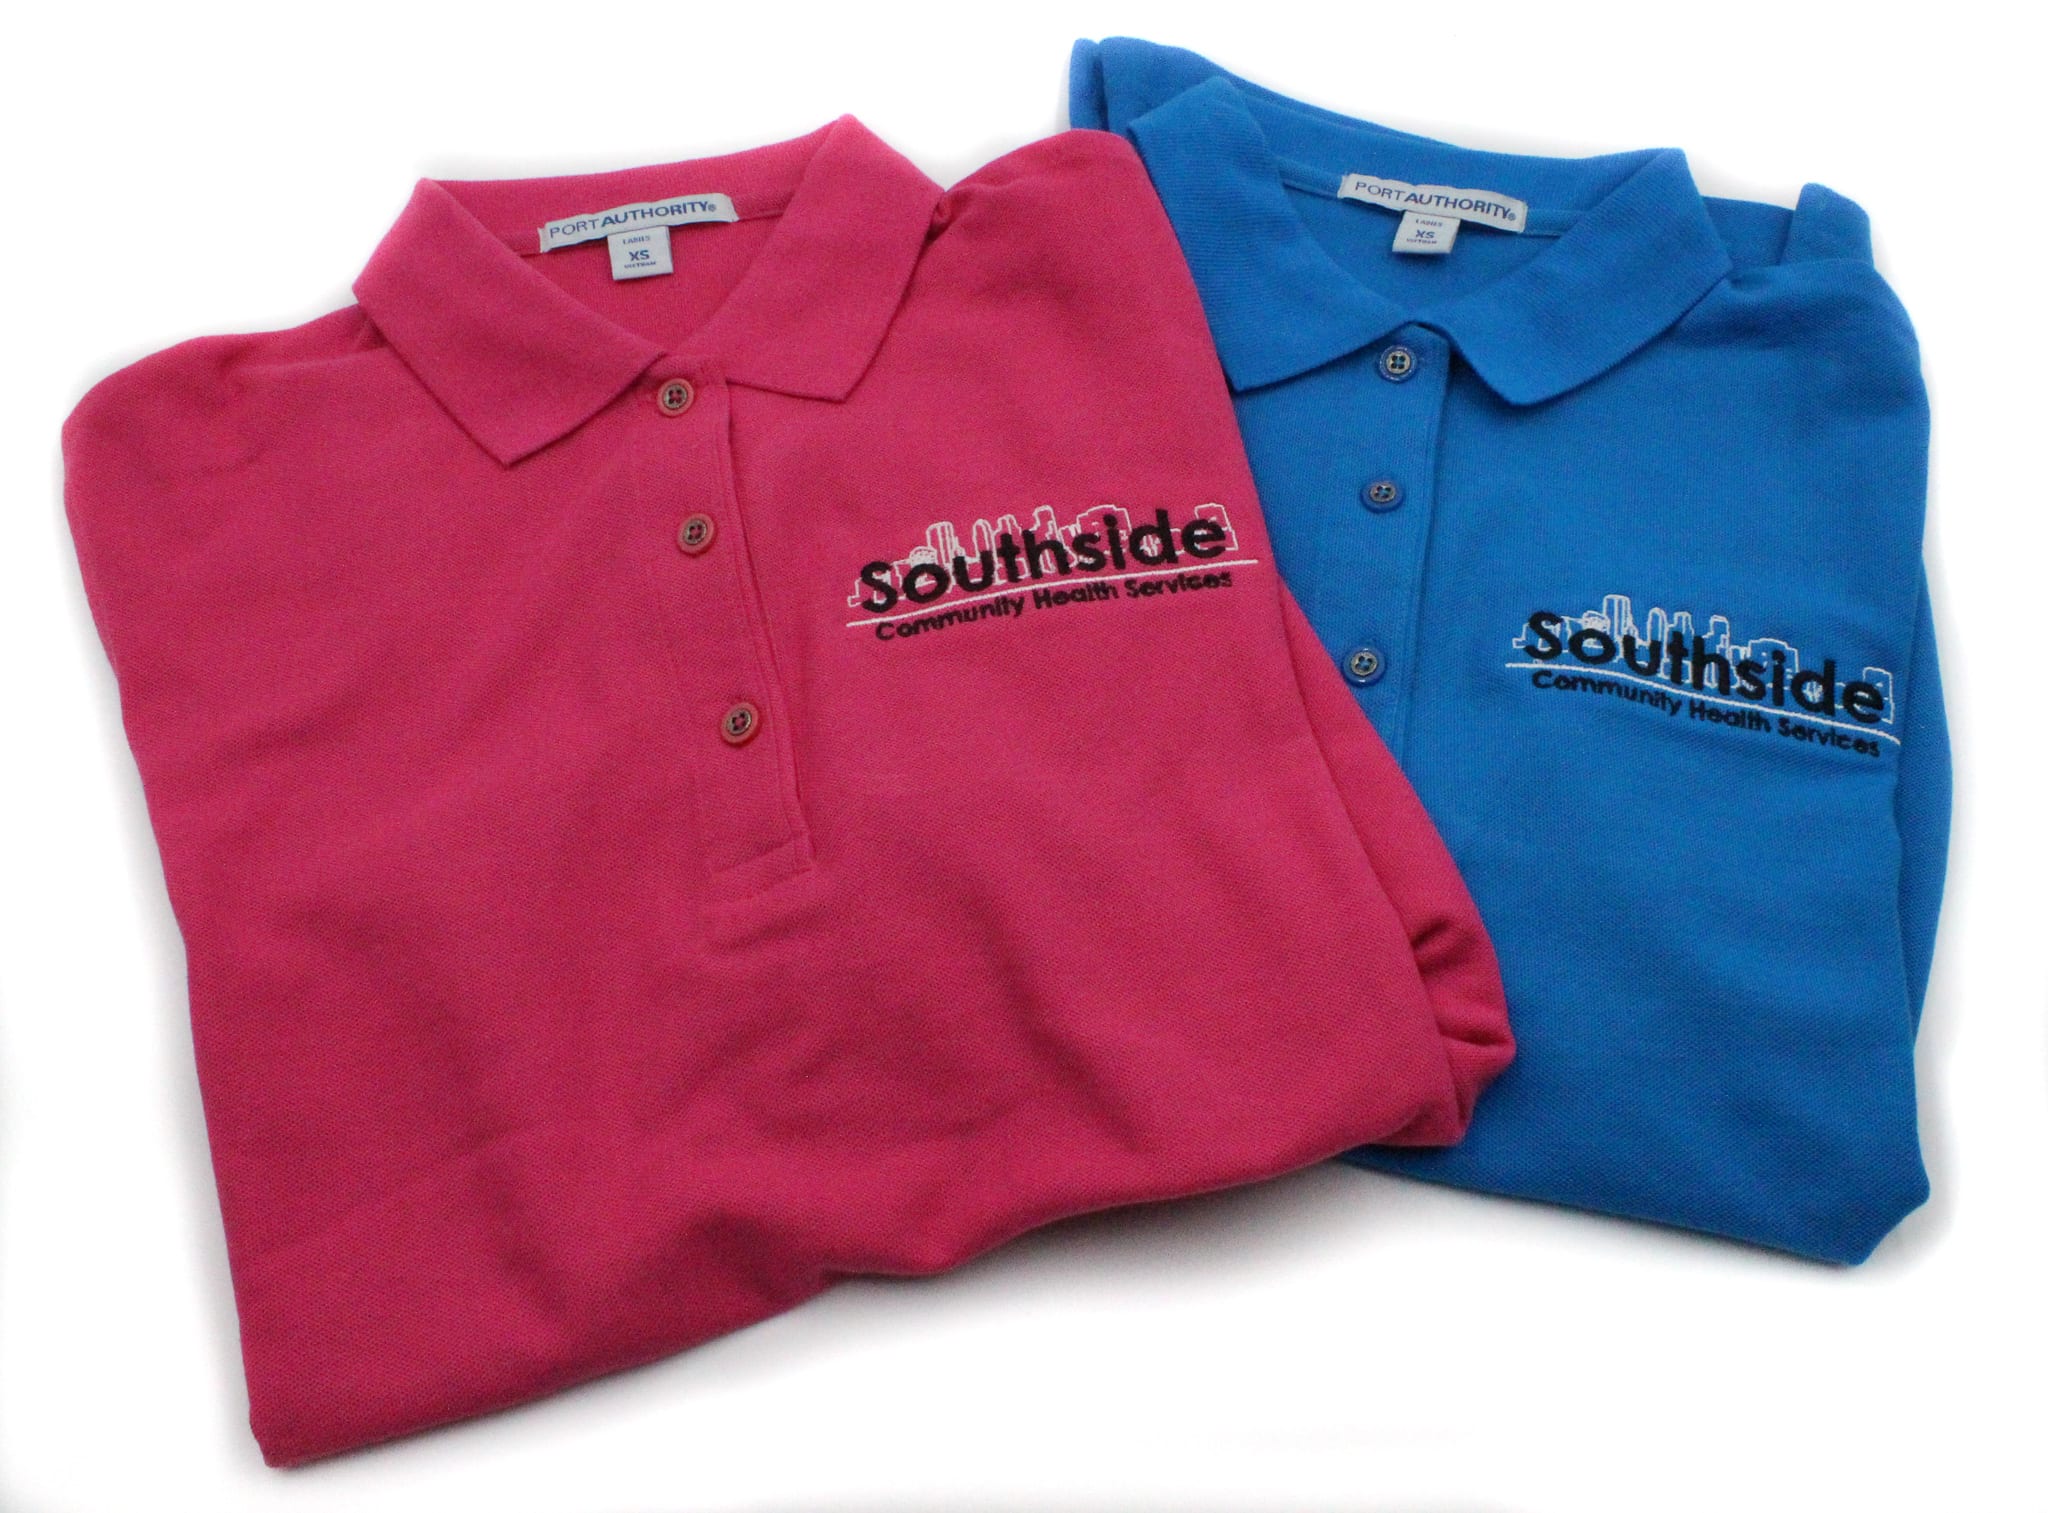 southside polo shirts